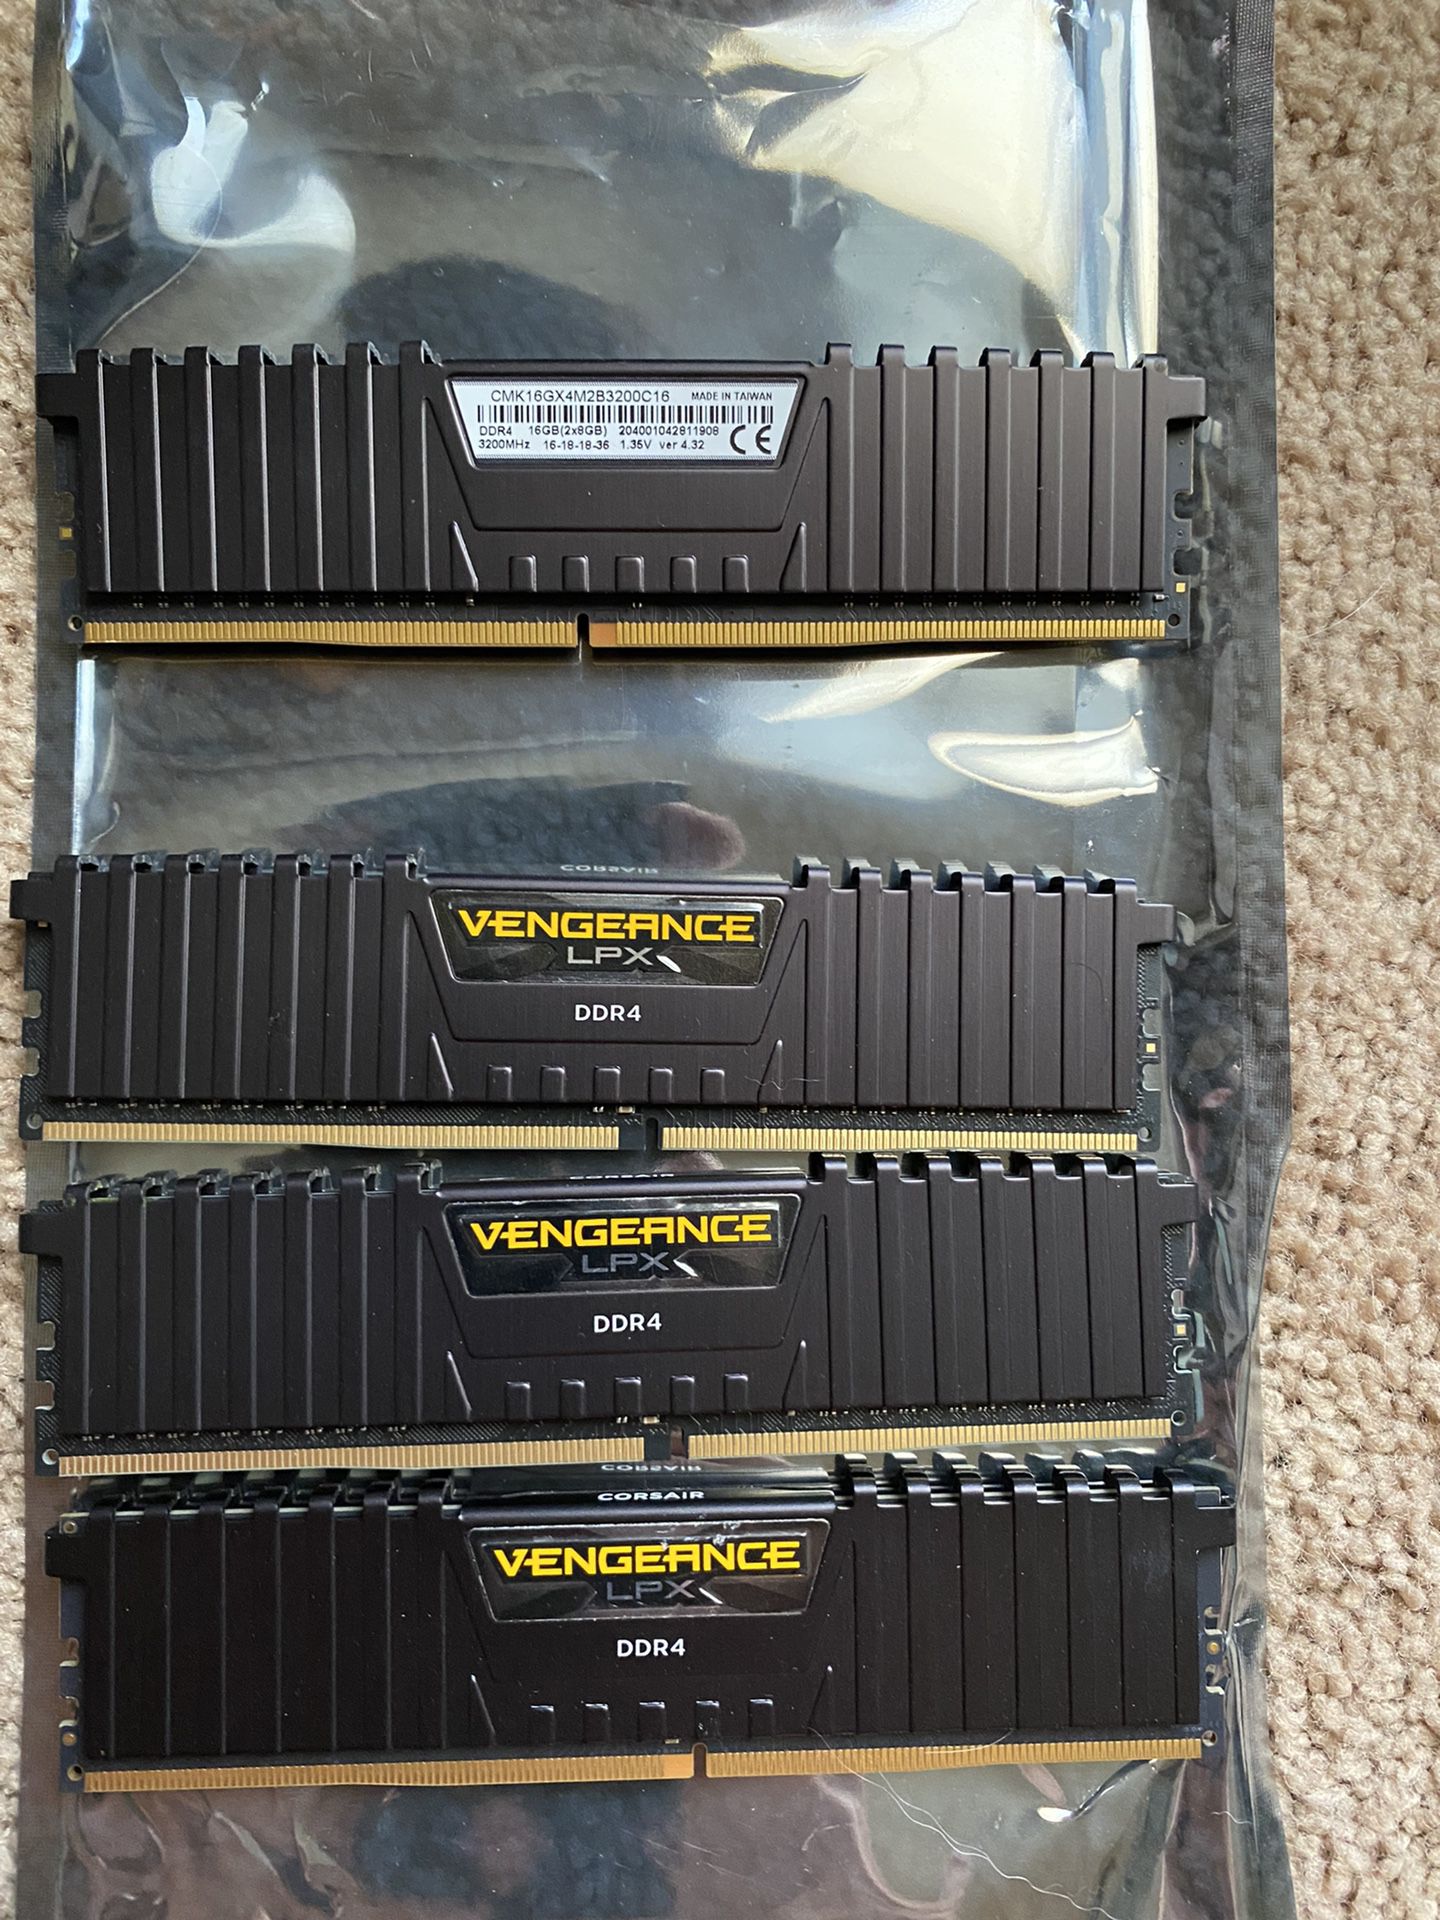 DDR4 Vengeance LPX Memory Cards